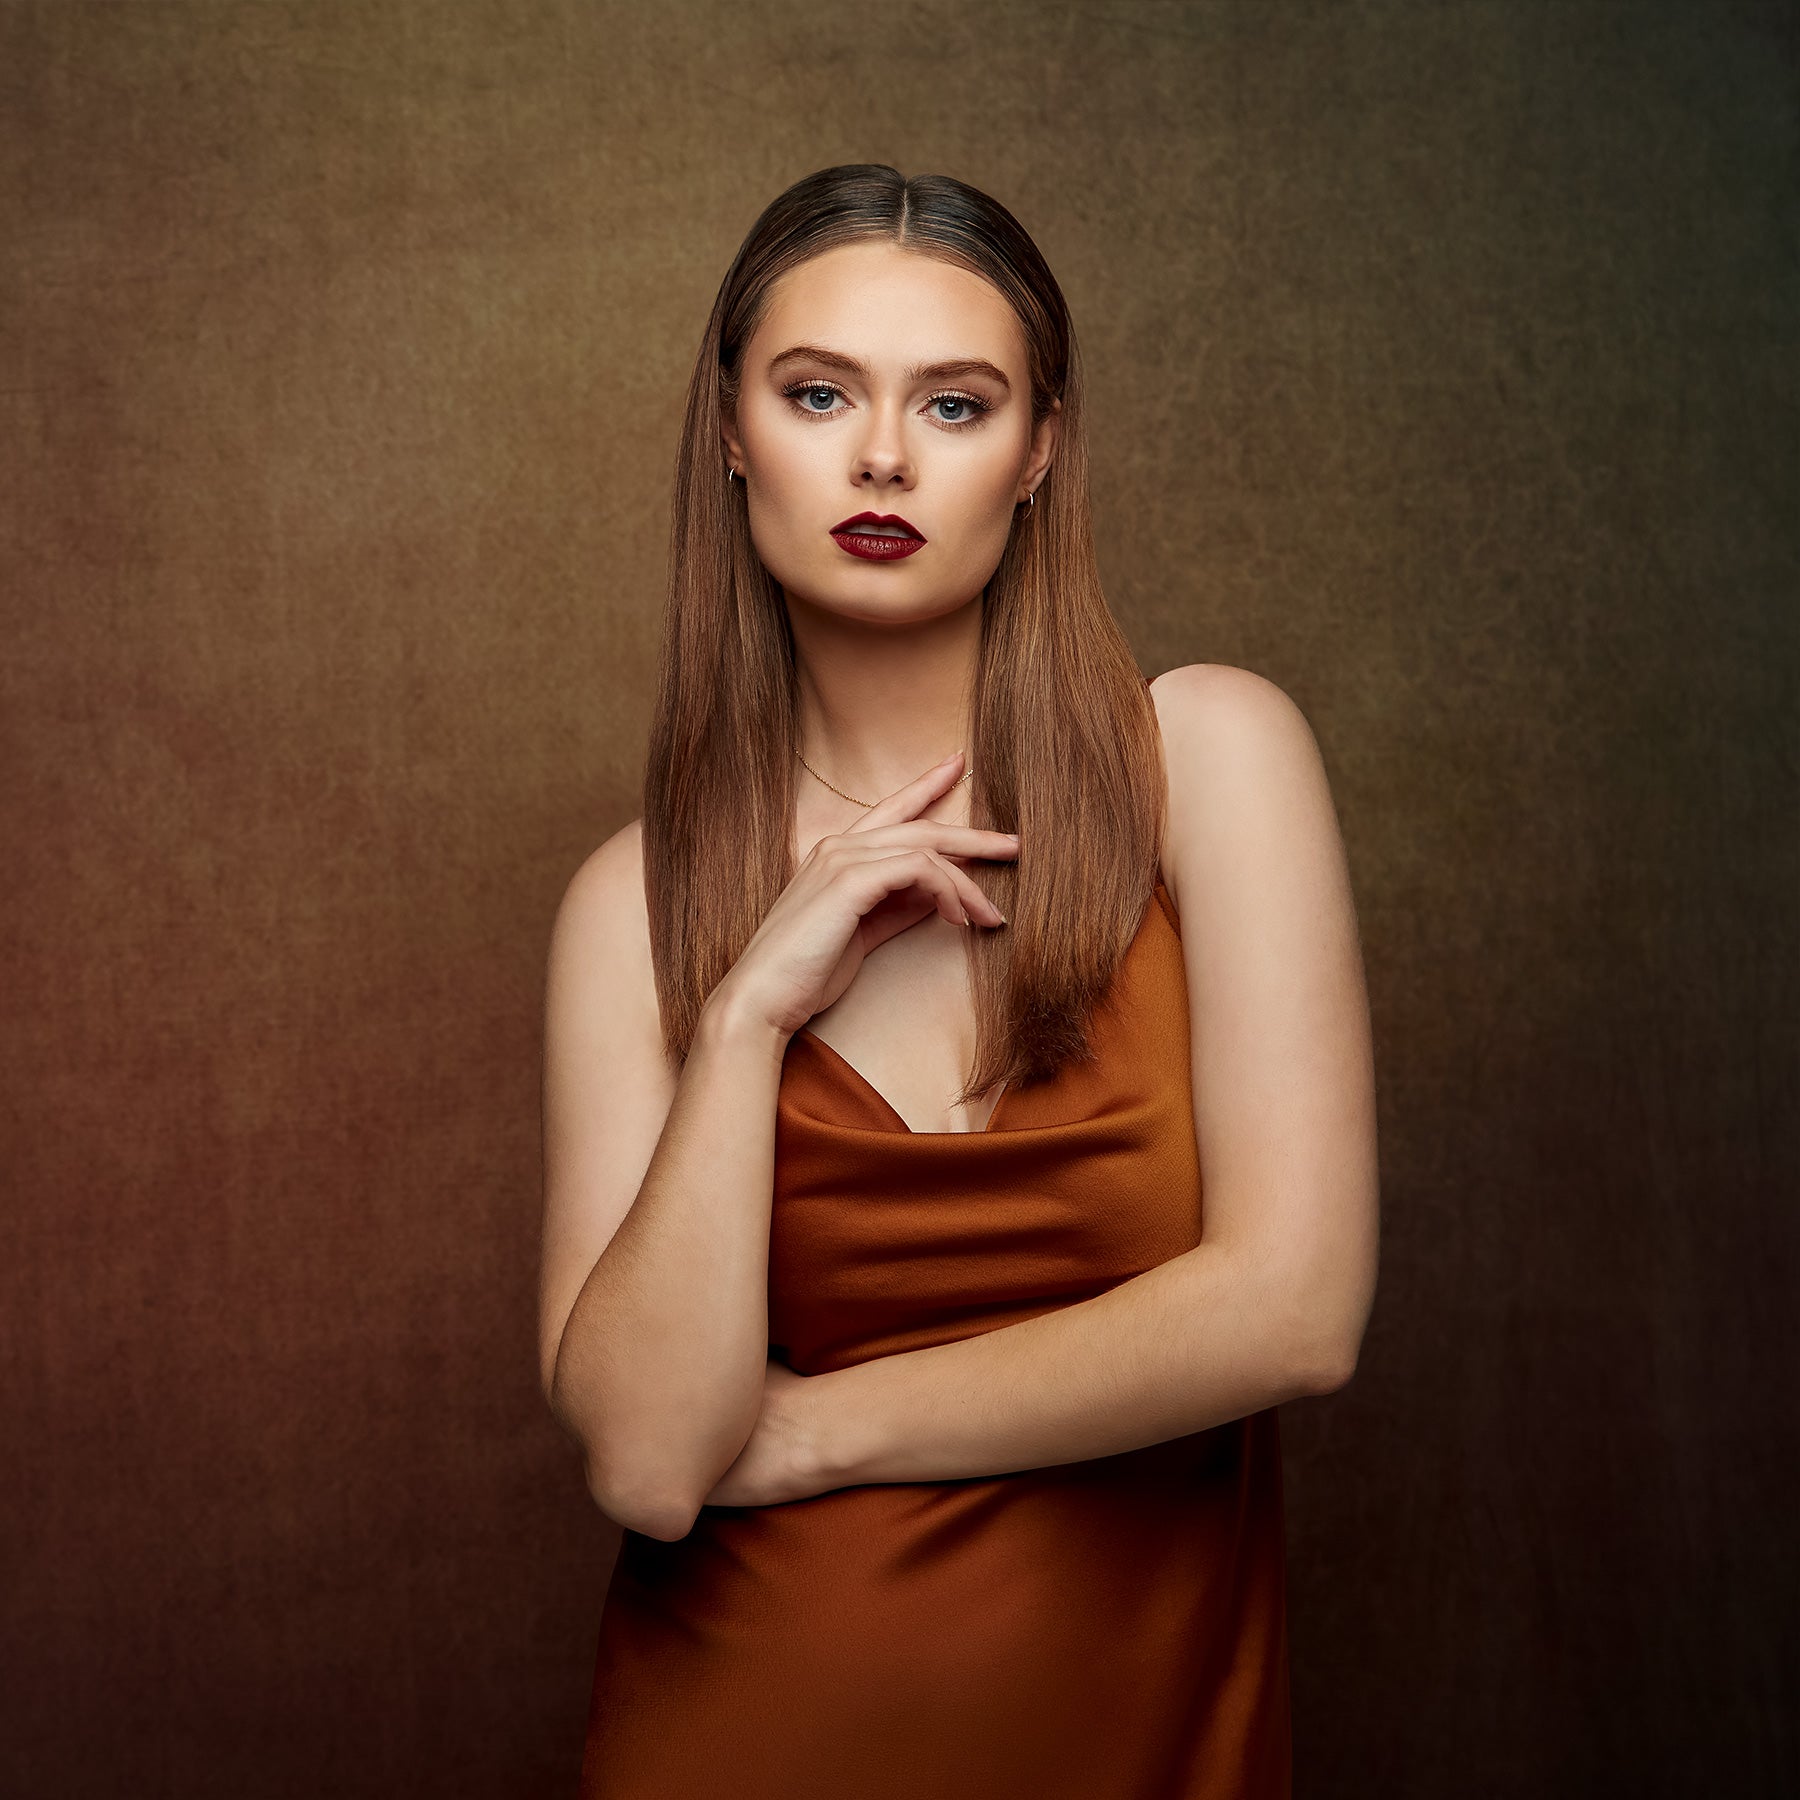 Female portrait photo using X-Drop Pro fabric backdrop